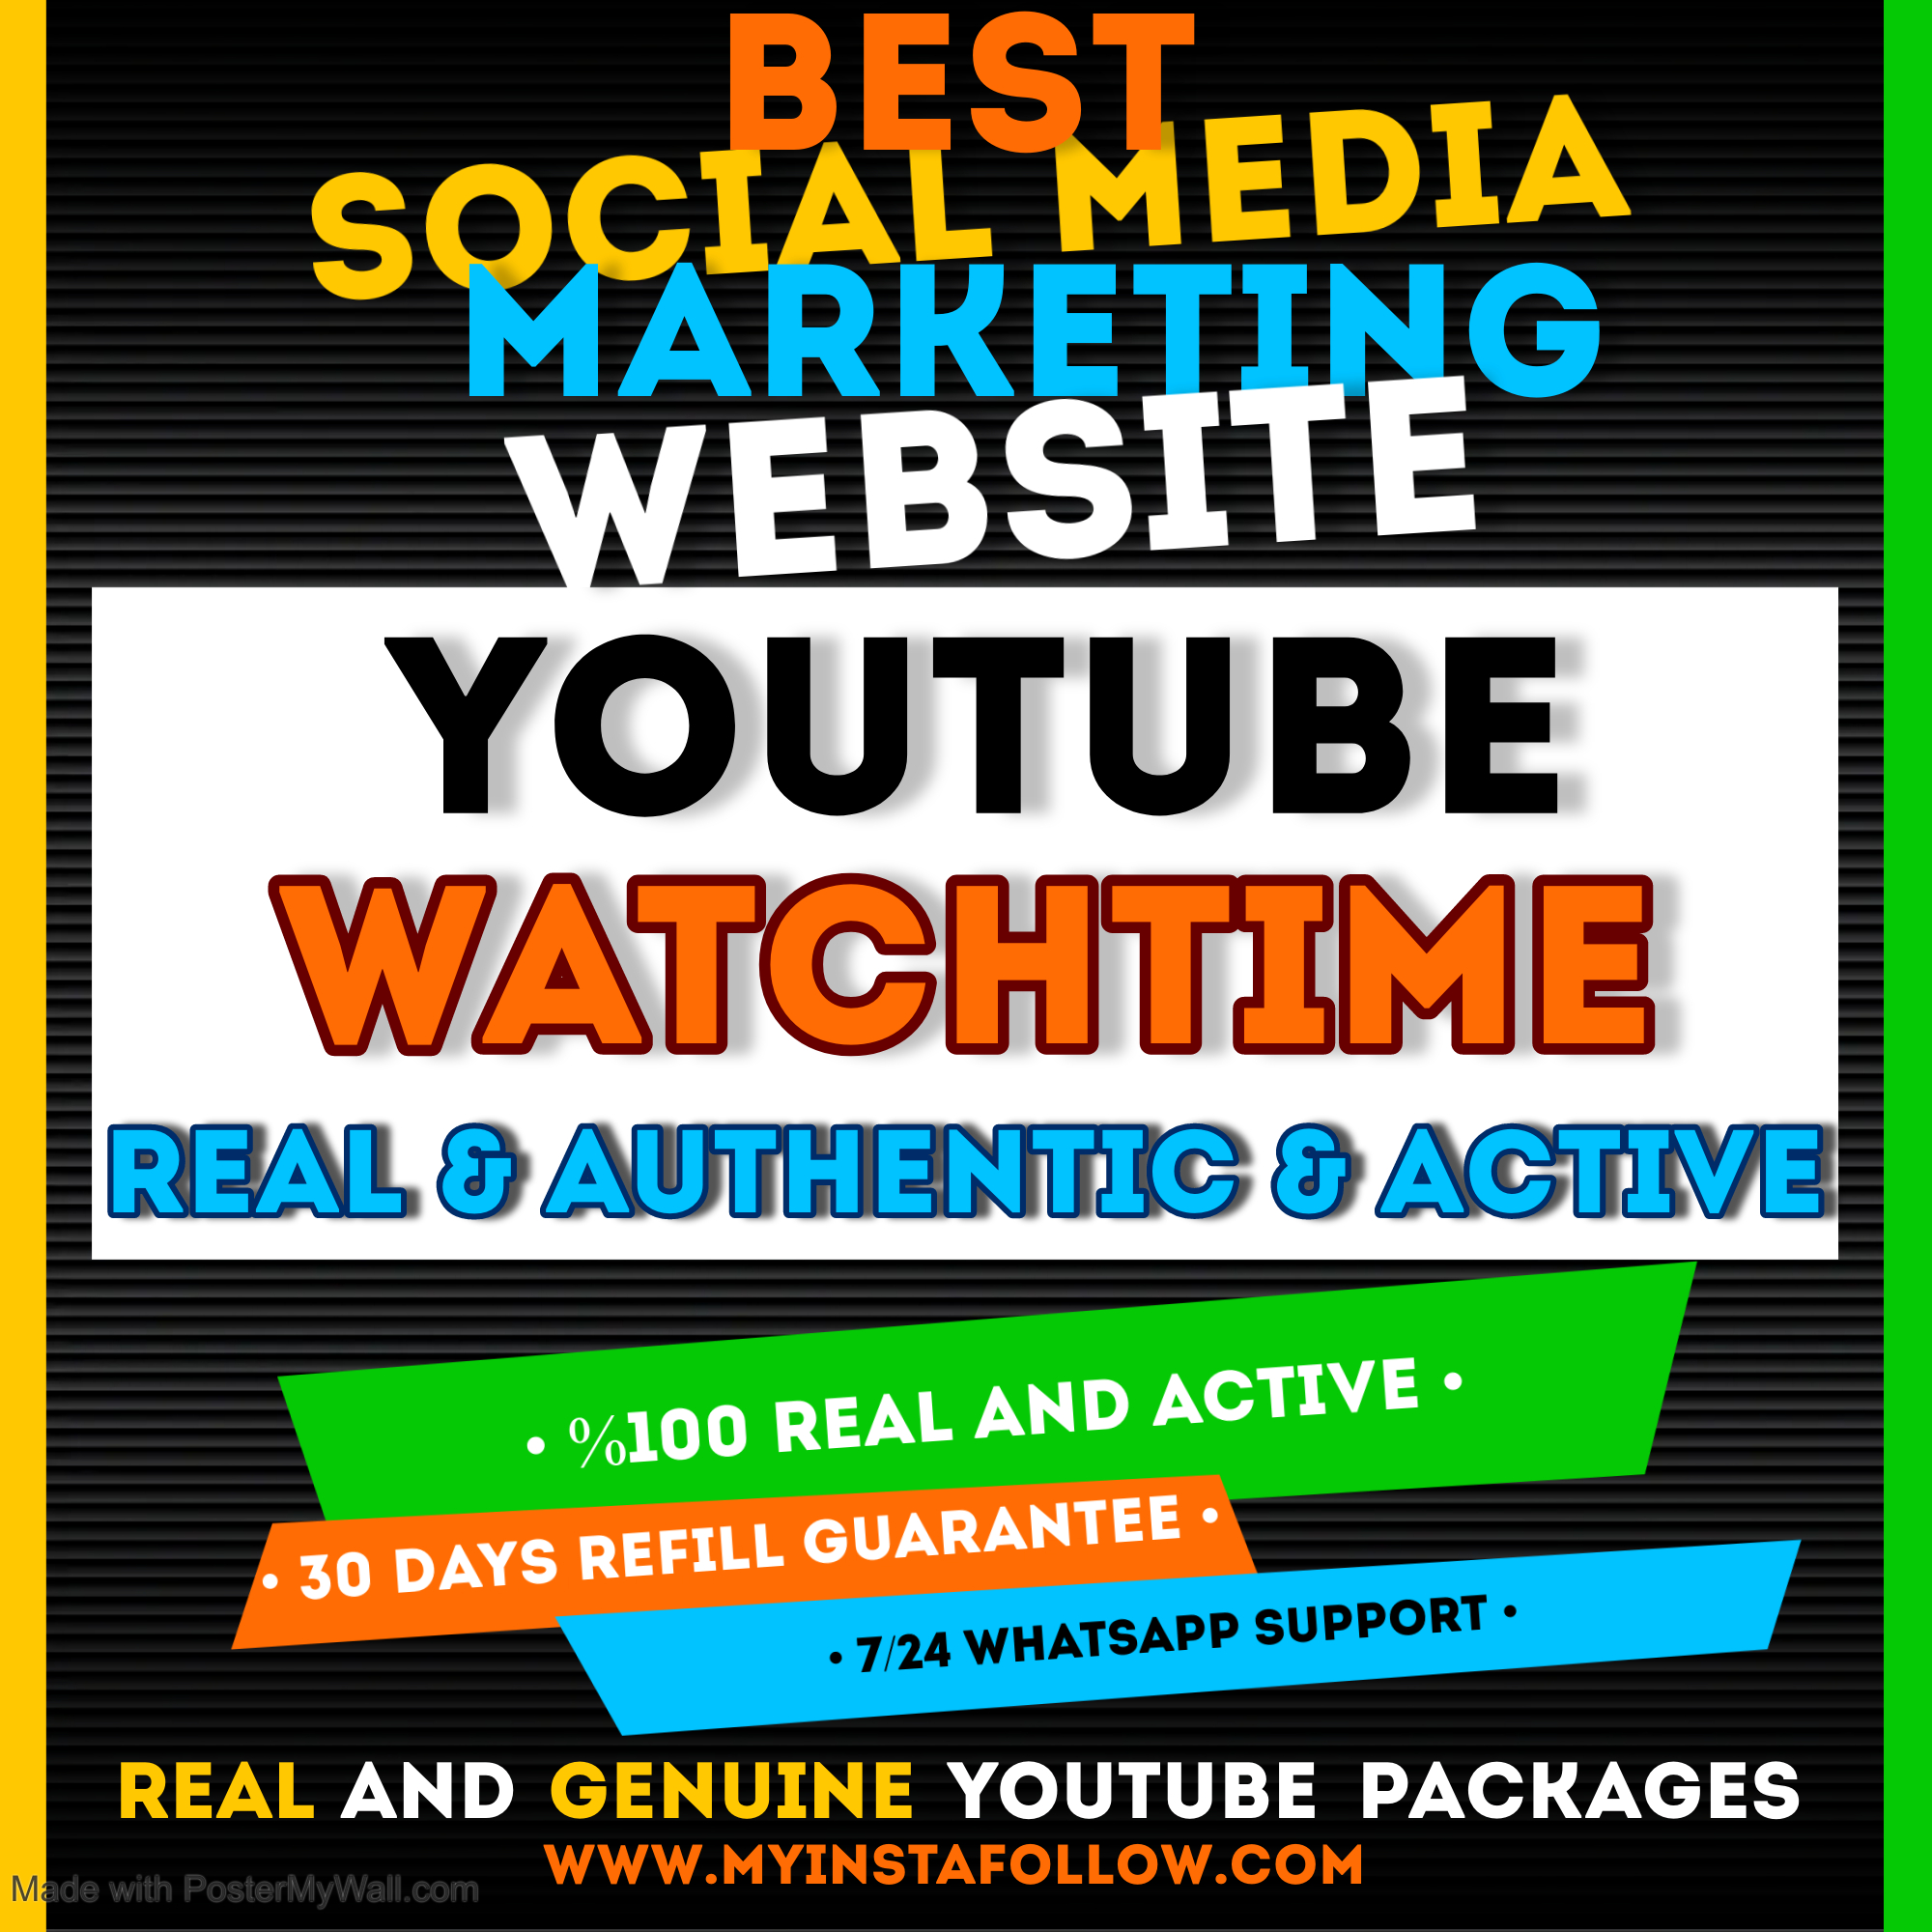 Buy Youtube Watchtime - 4000 HOURS -